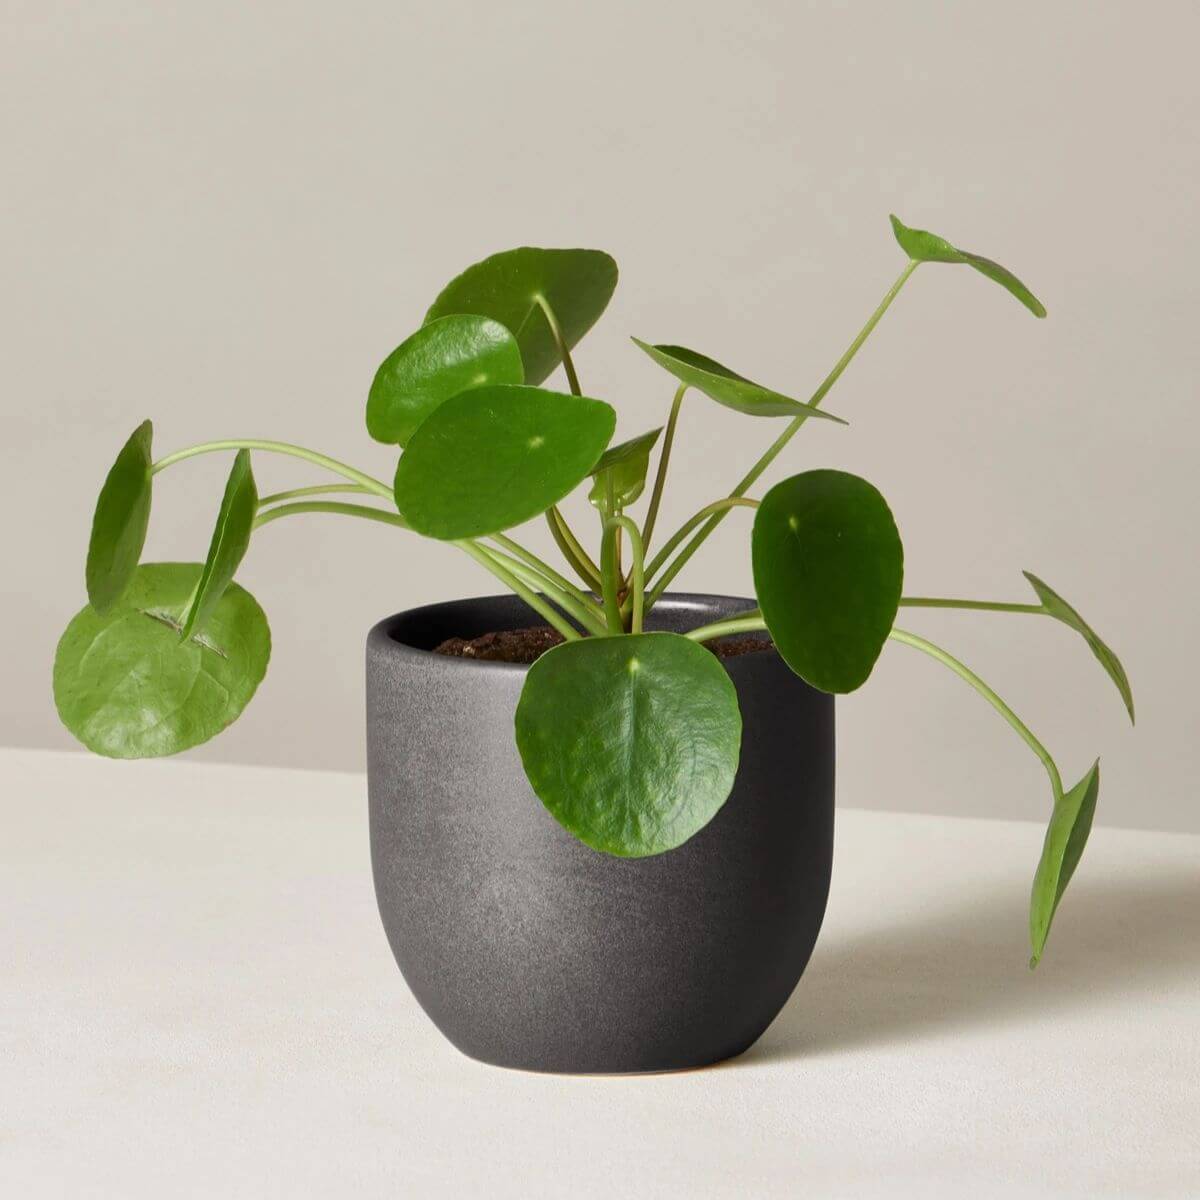 Pilea plant in a black pot.